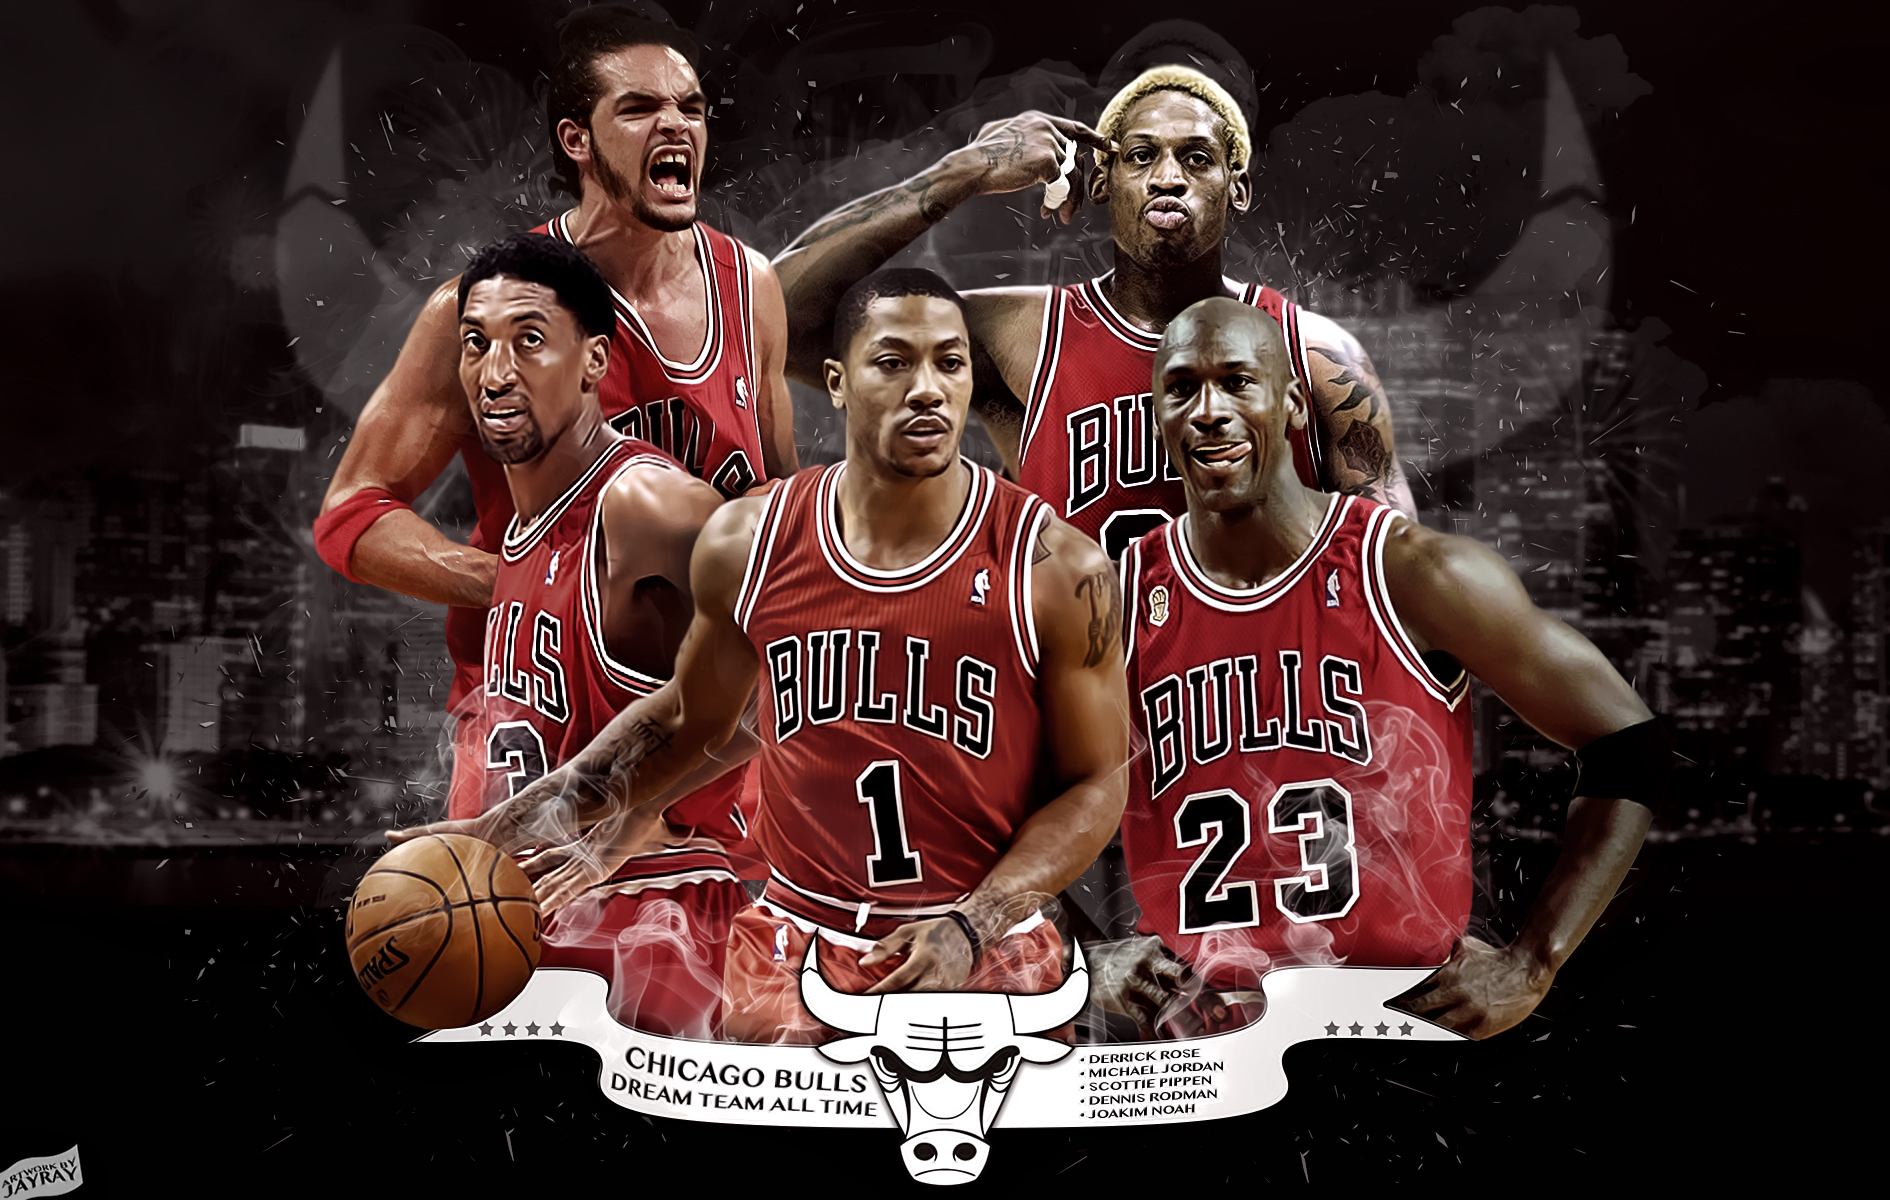 Chicago Bulls All Time Dream Team by JayRay by ArtworkByJayRay on